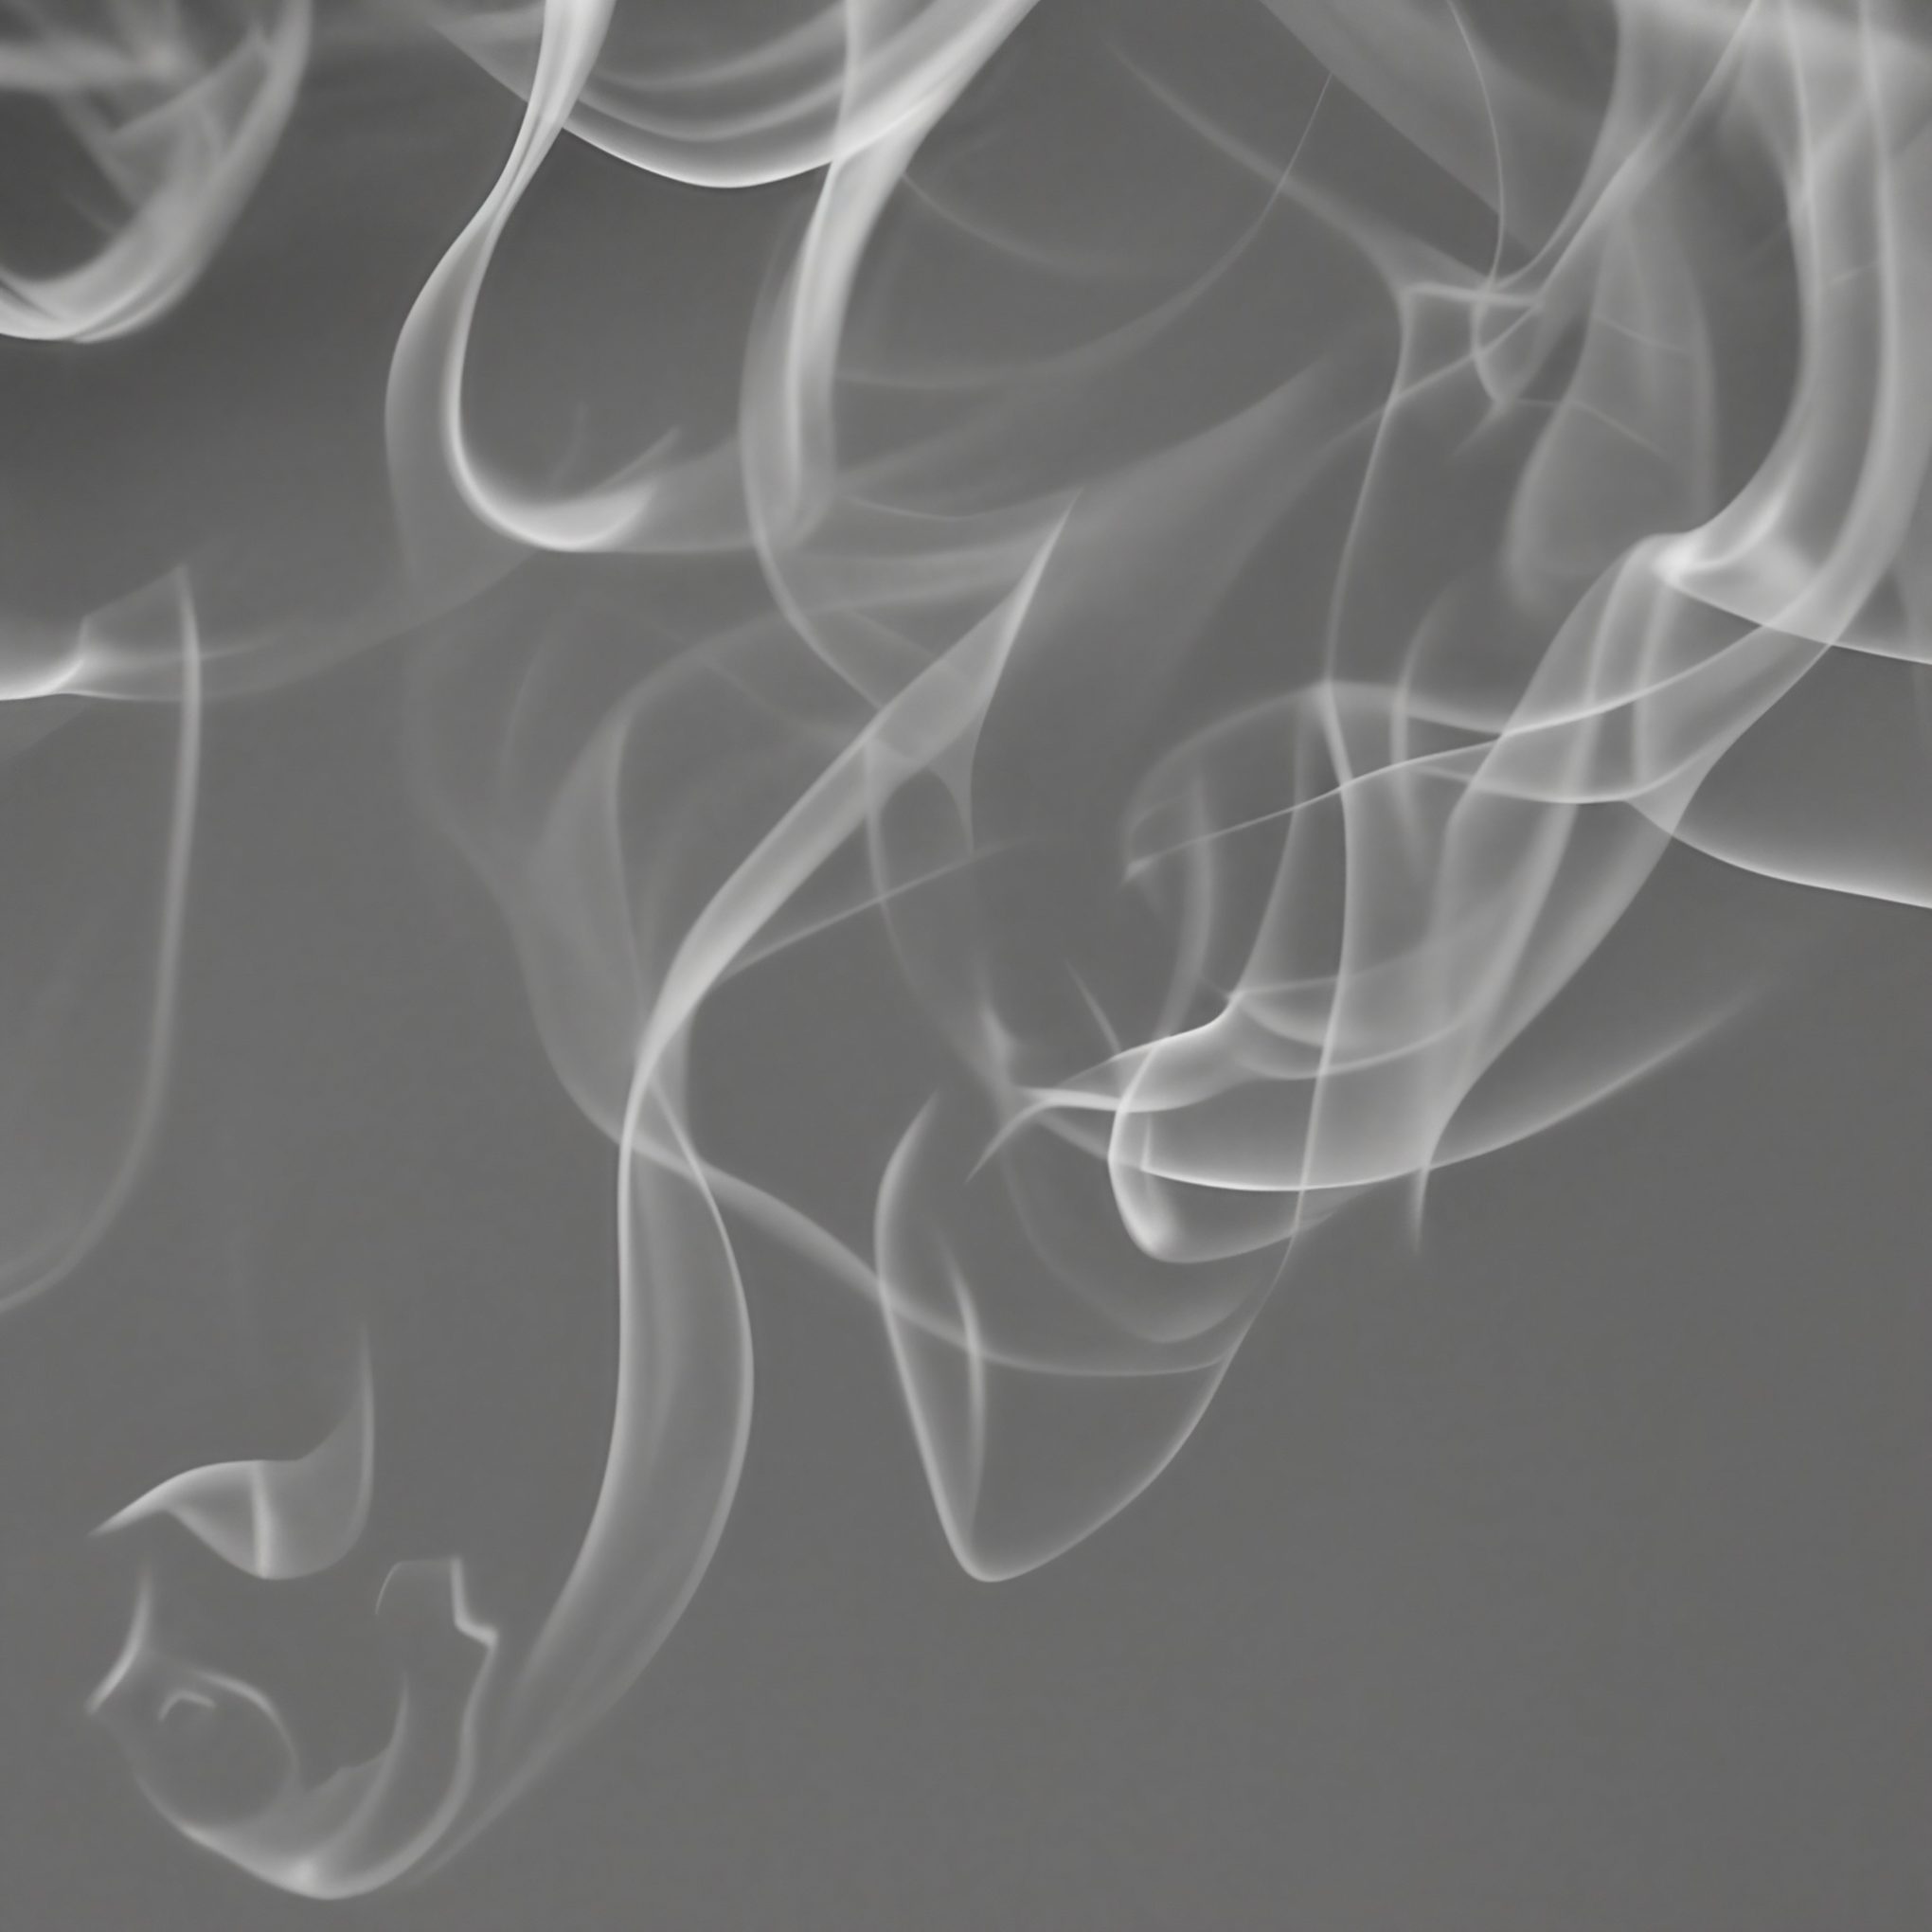 White Smoke on Dark Grey Background Stock Image